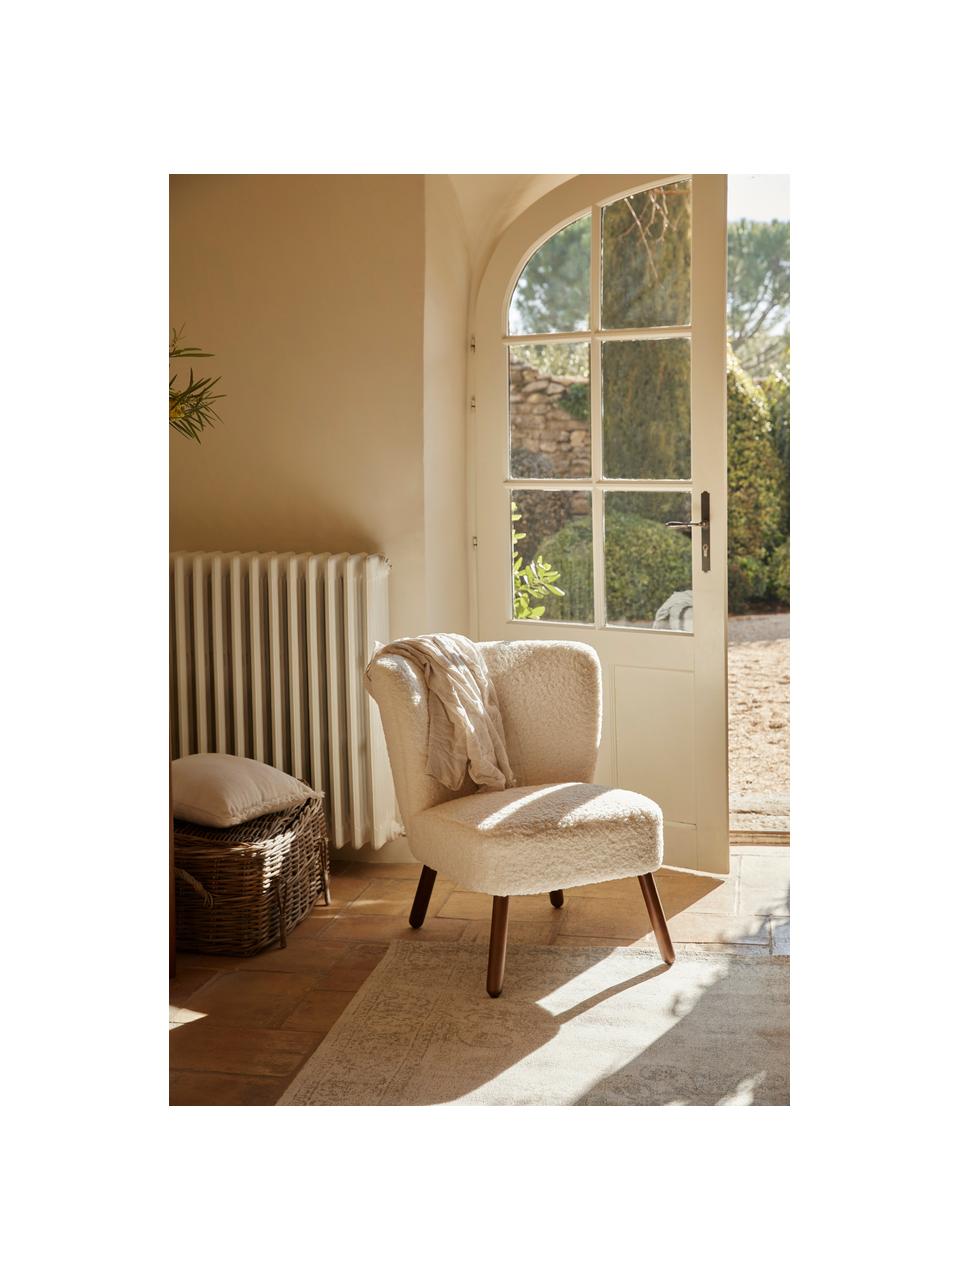 Teddy fauteuil Robine in wit, Bekleding: teddy (polyester), Poten: berkenhout, gelakt, Teddy wit, berkenhoutkleurig, gelakt, B 63 x D 73 cm